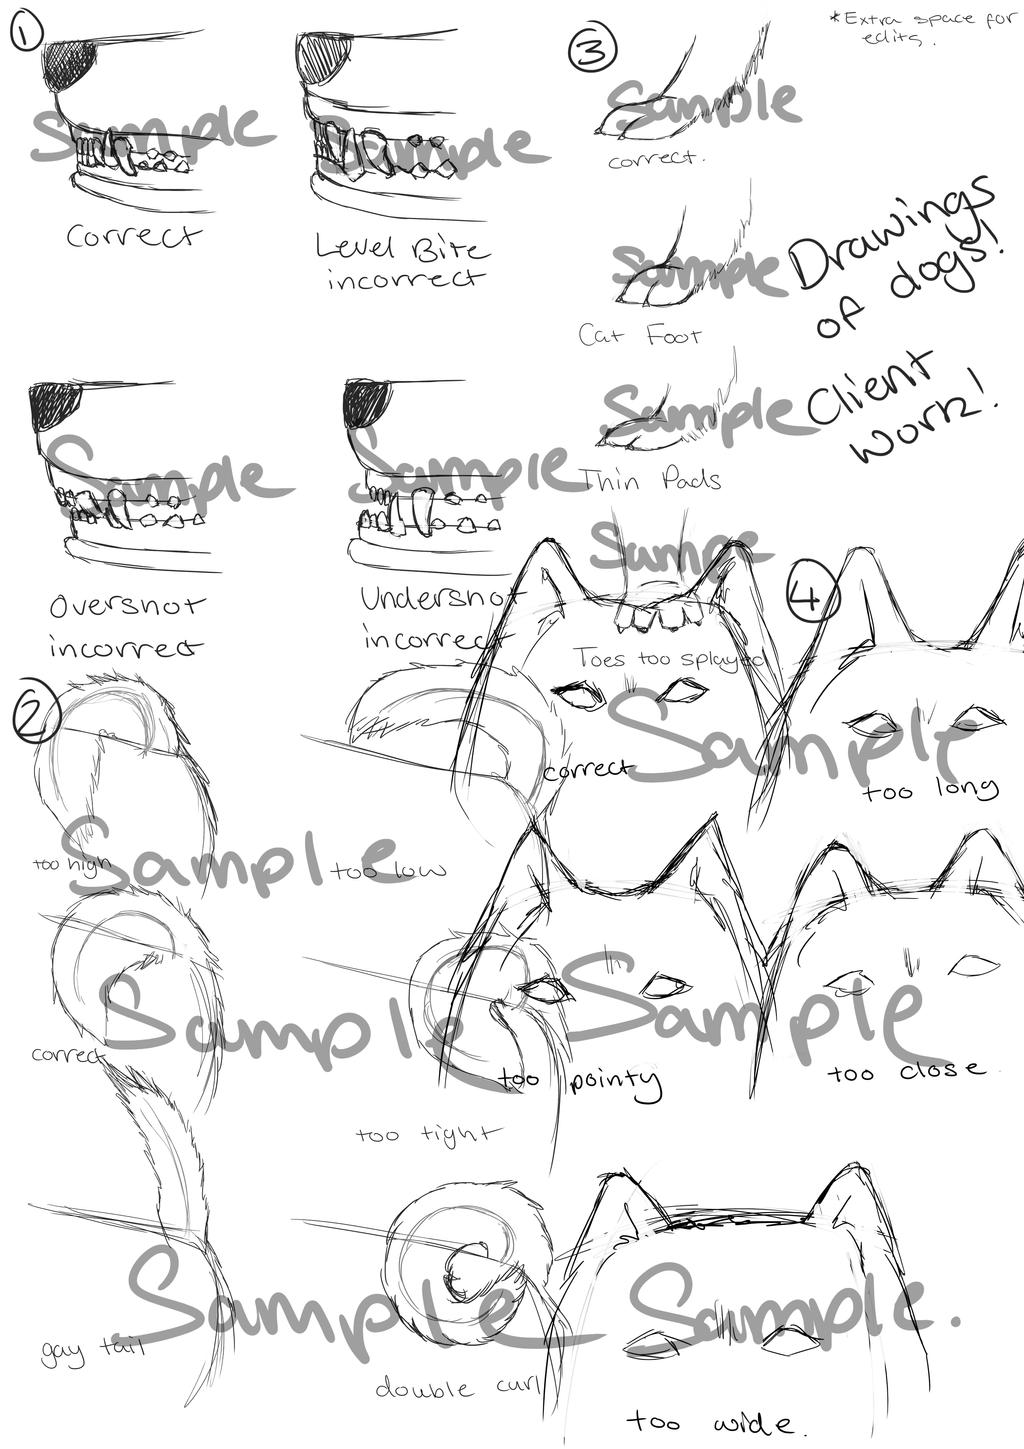 Sketch Dump Samples